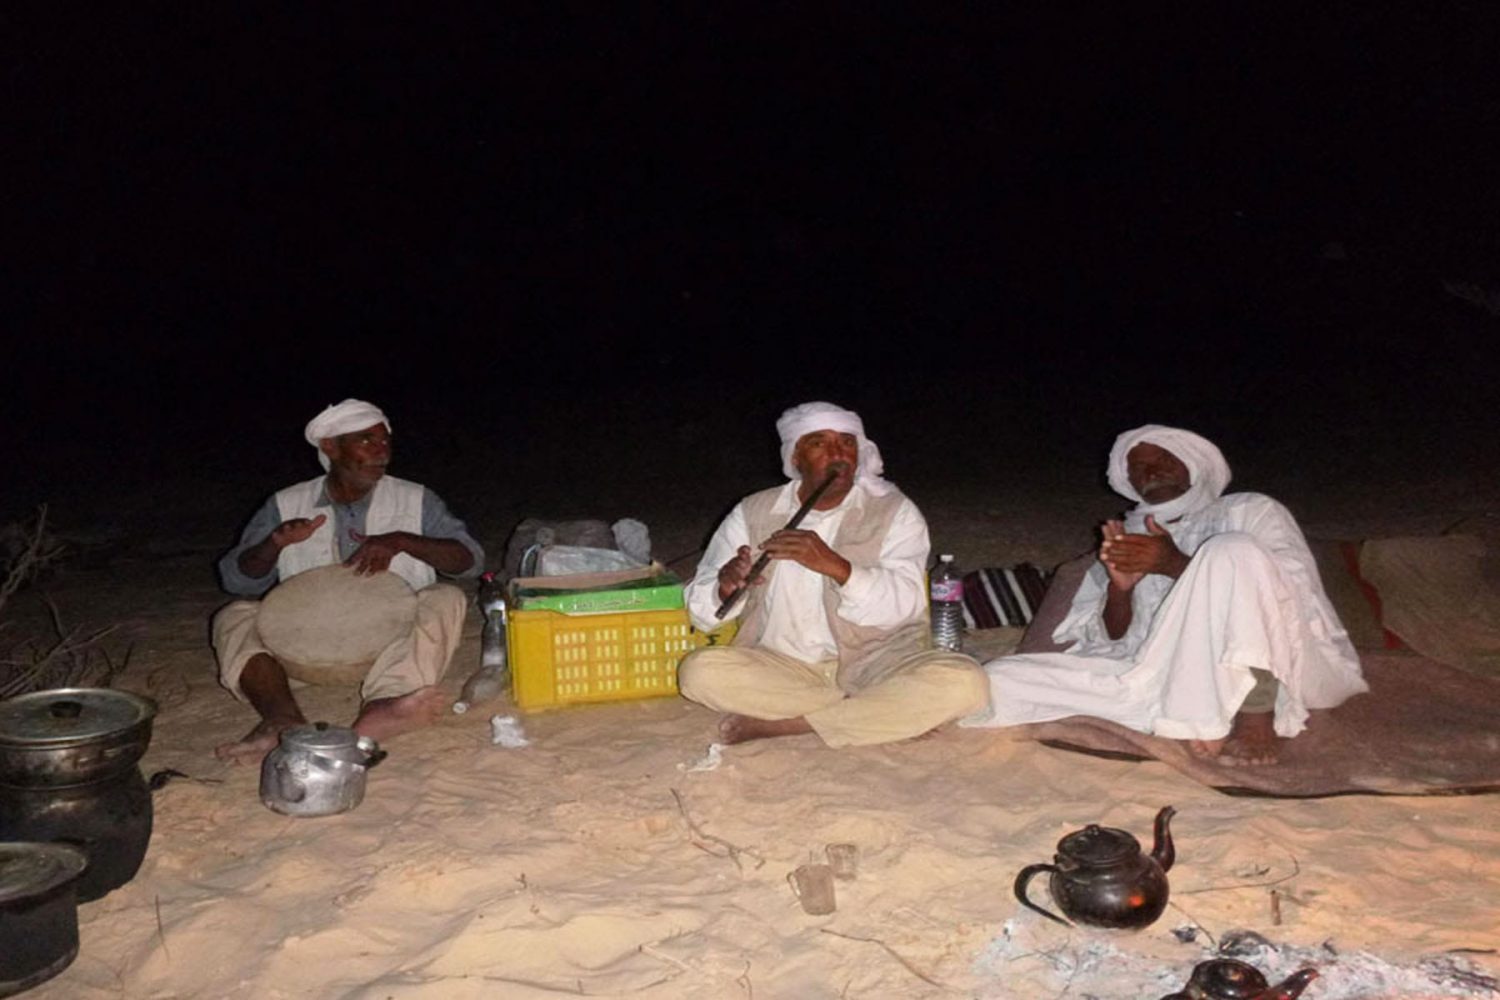 Bivouac camping overnight in the Tunisian Sahara